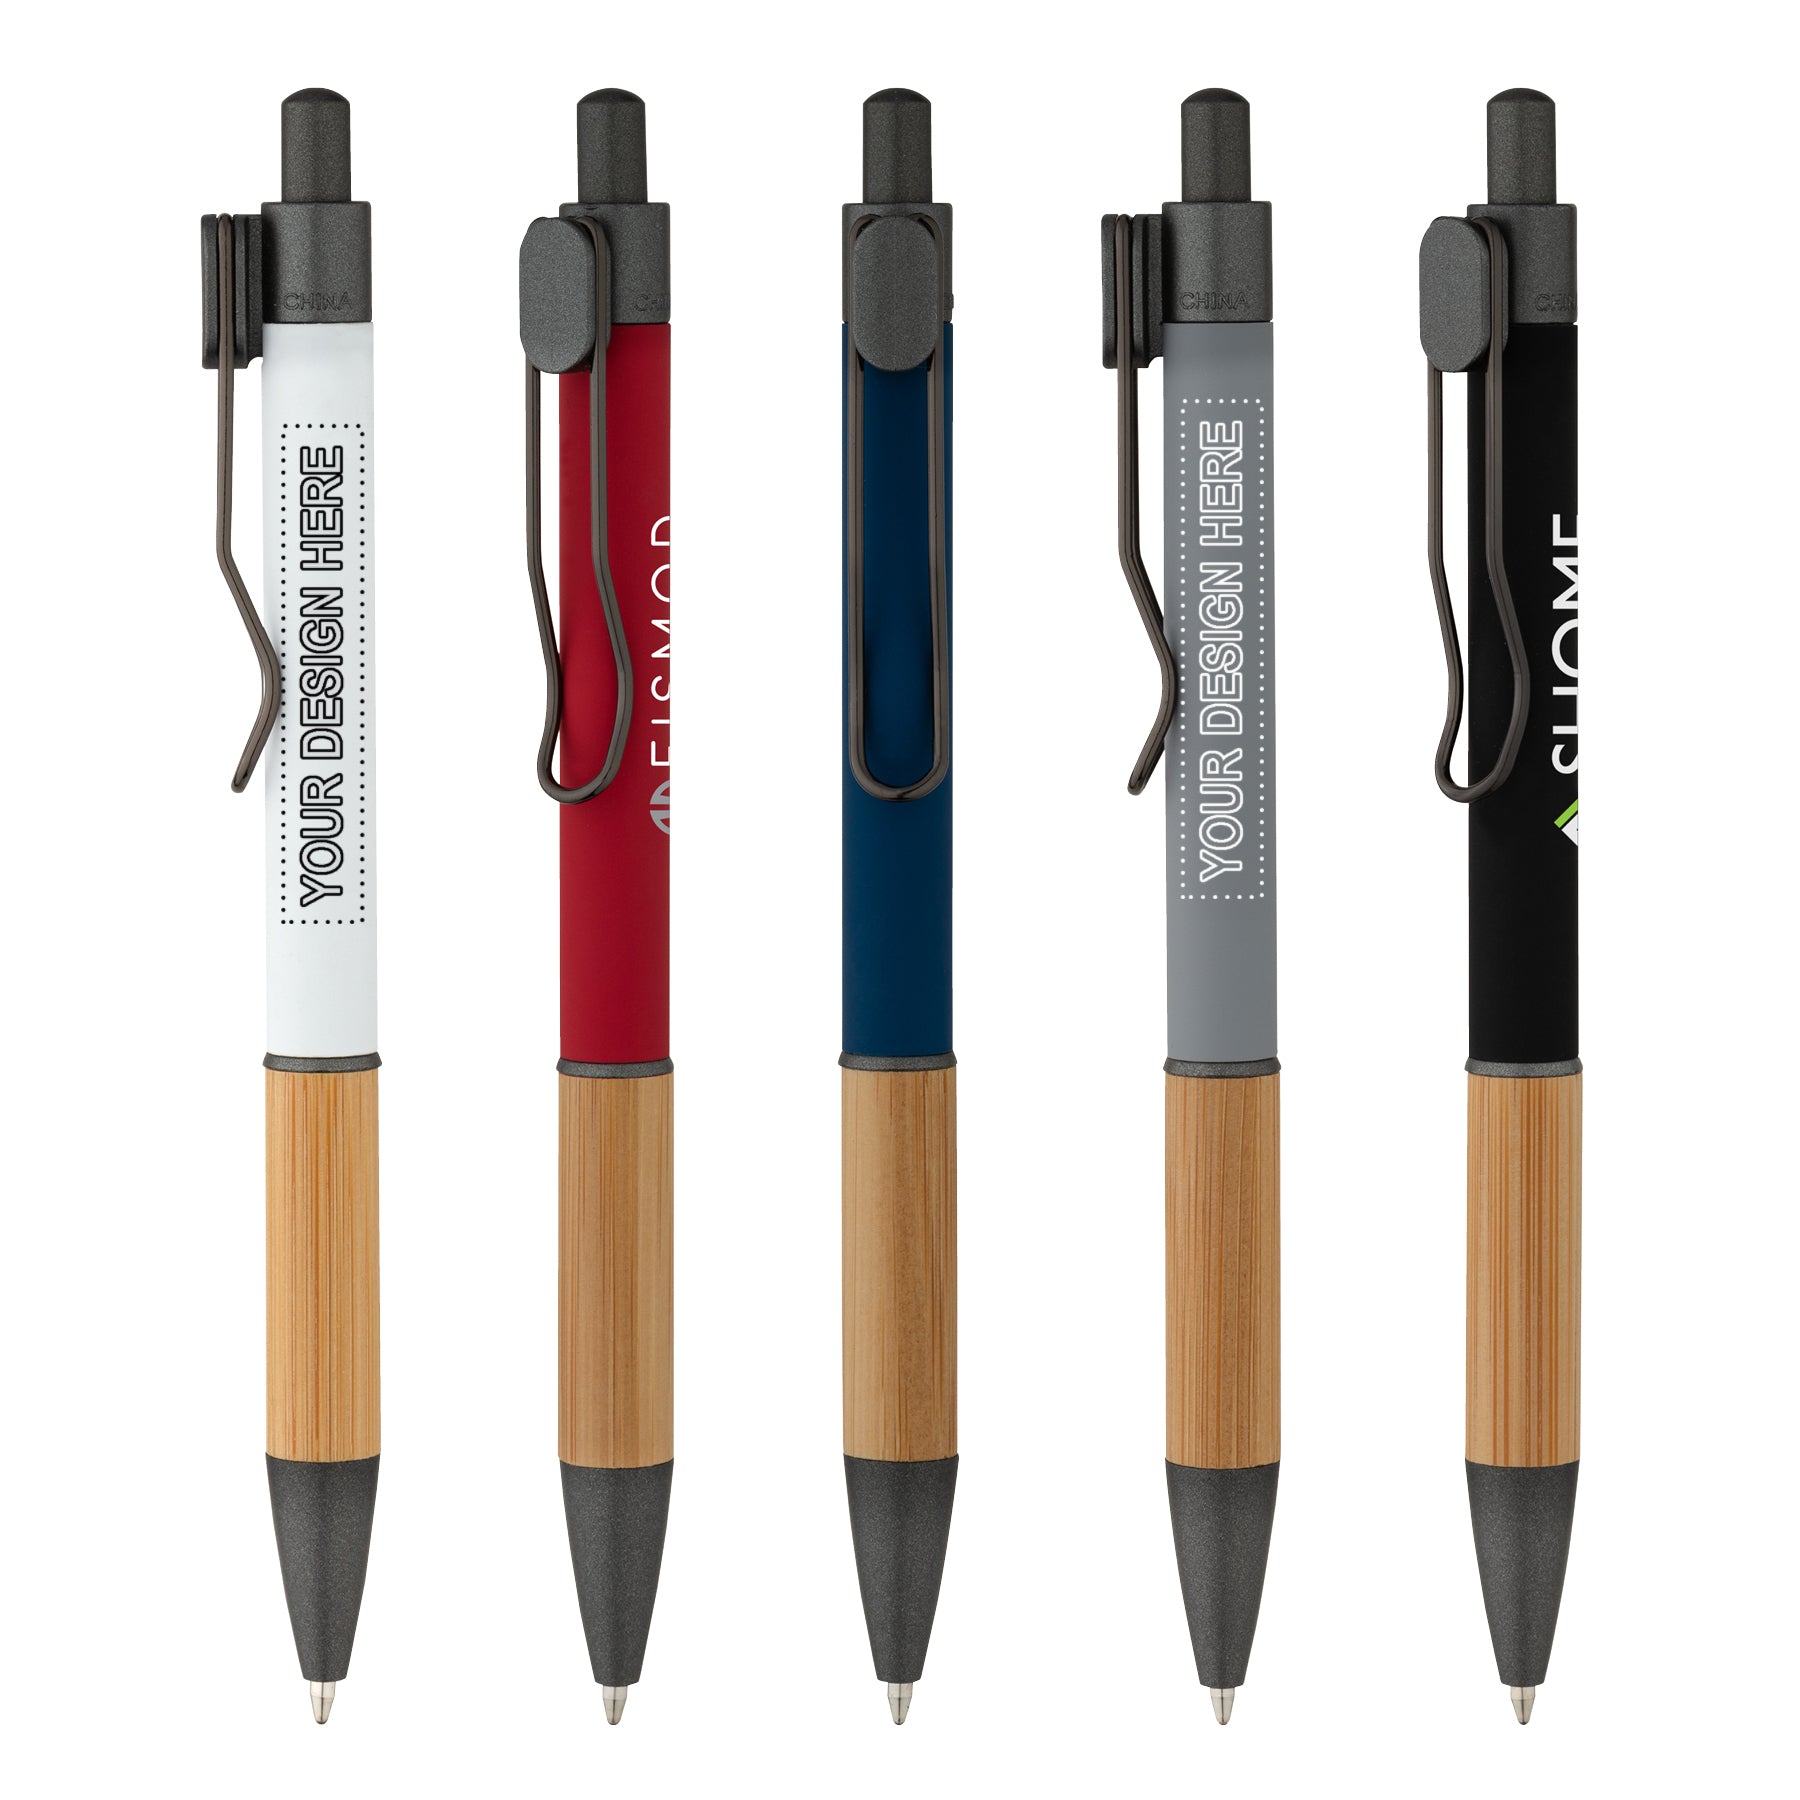 Customized manoa ballpoint bamboo pen variety of colors.